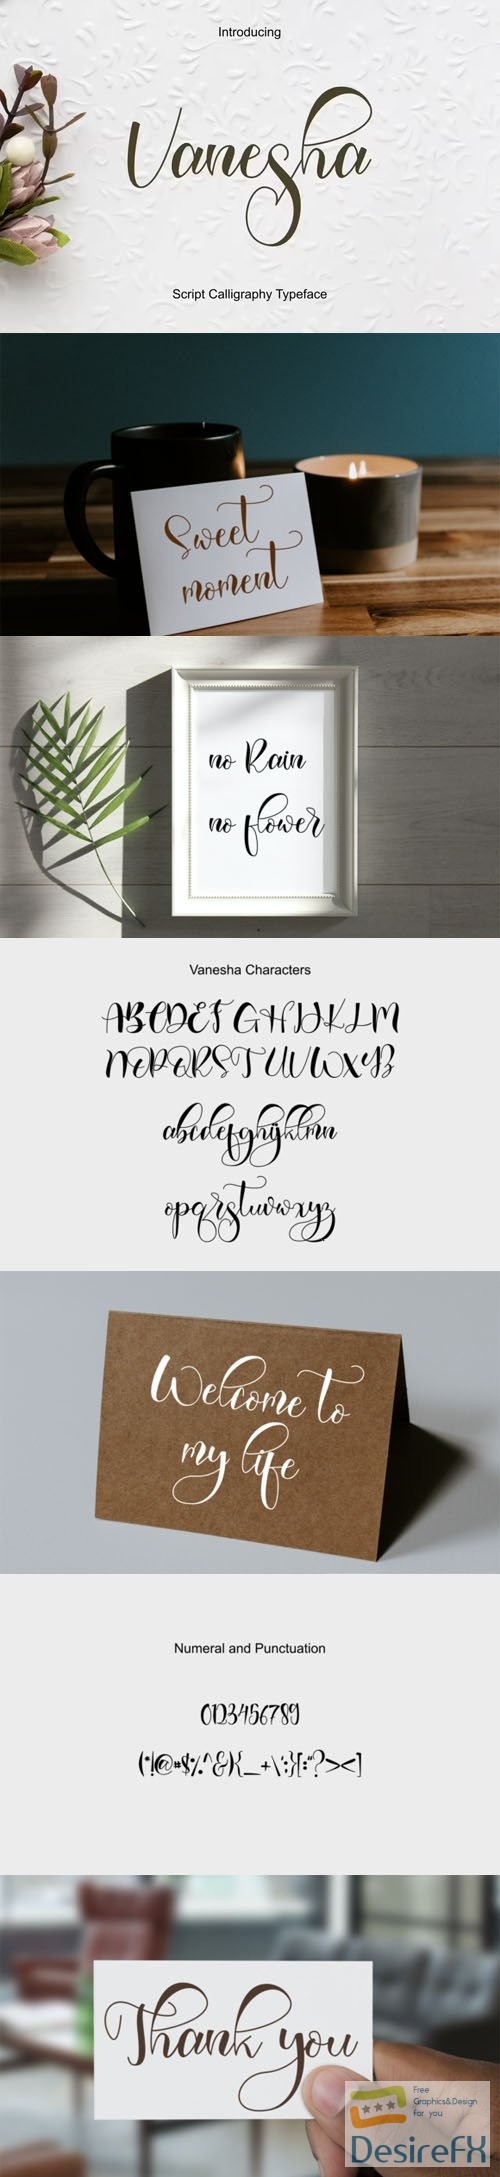 Vanesha Script - Lettered Calligraphy Typeface